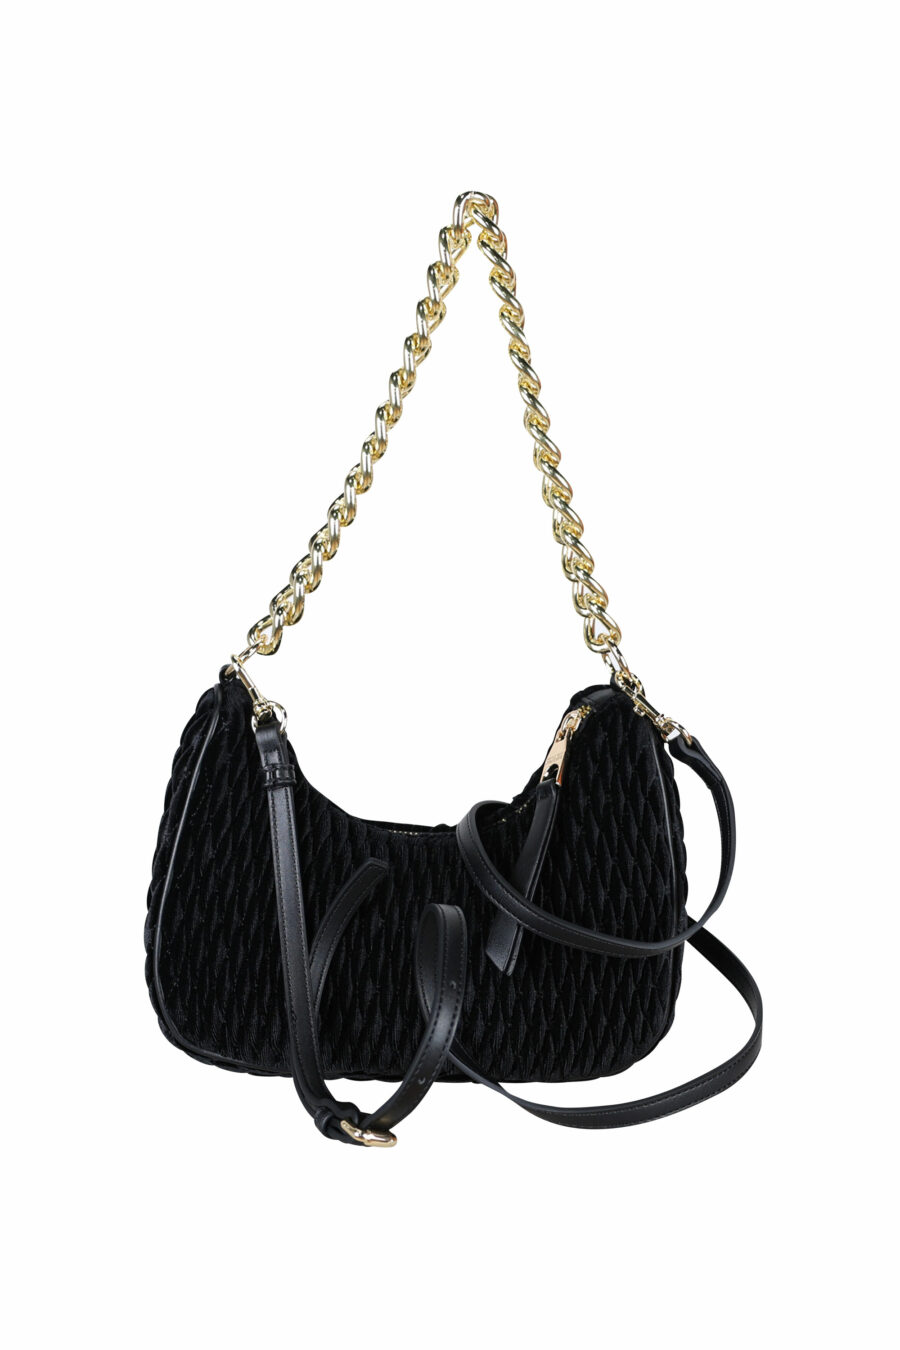 Black velvet hobo style shoulder bag with chain and logo plaque - 8052019408690 2